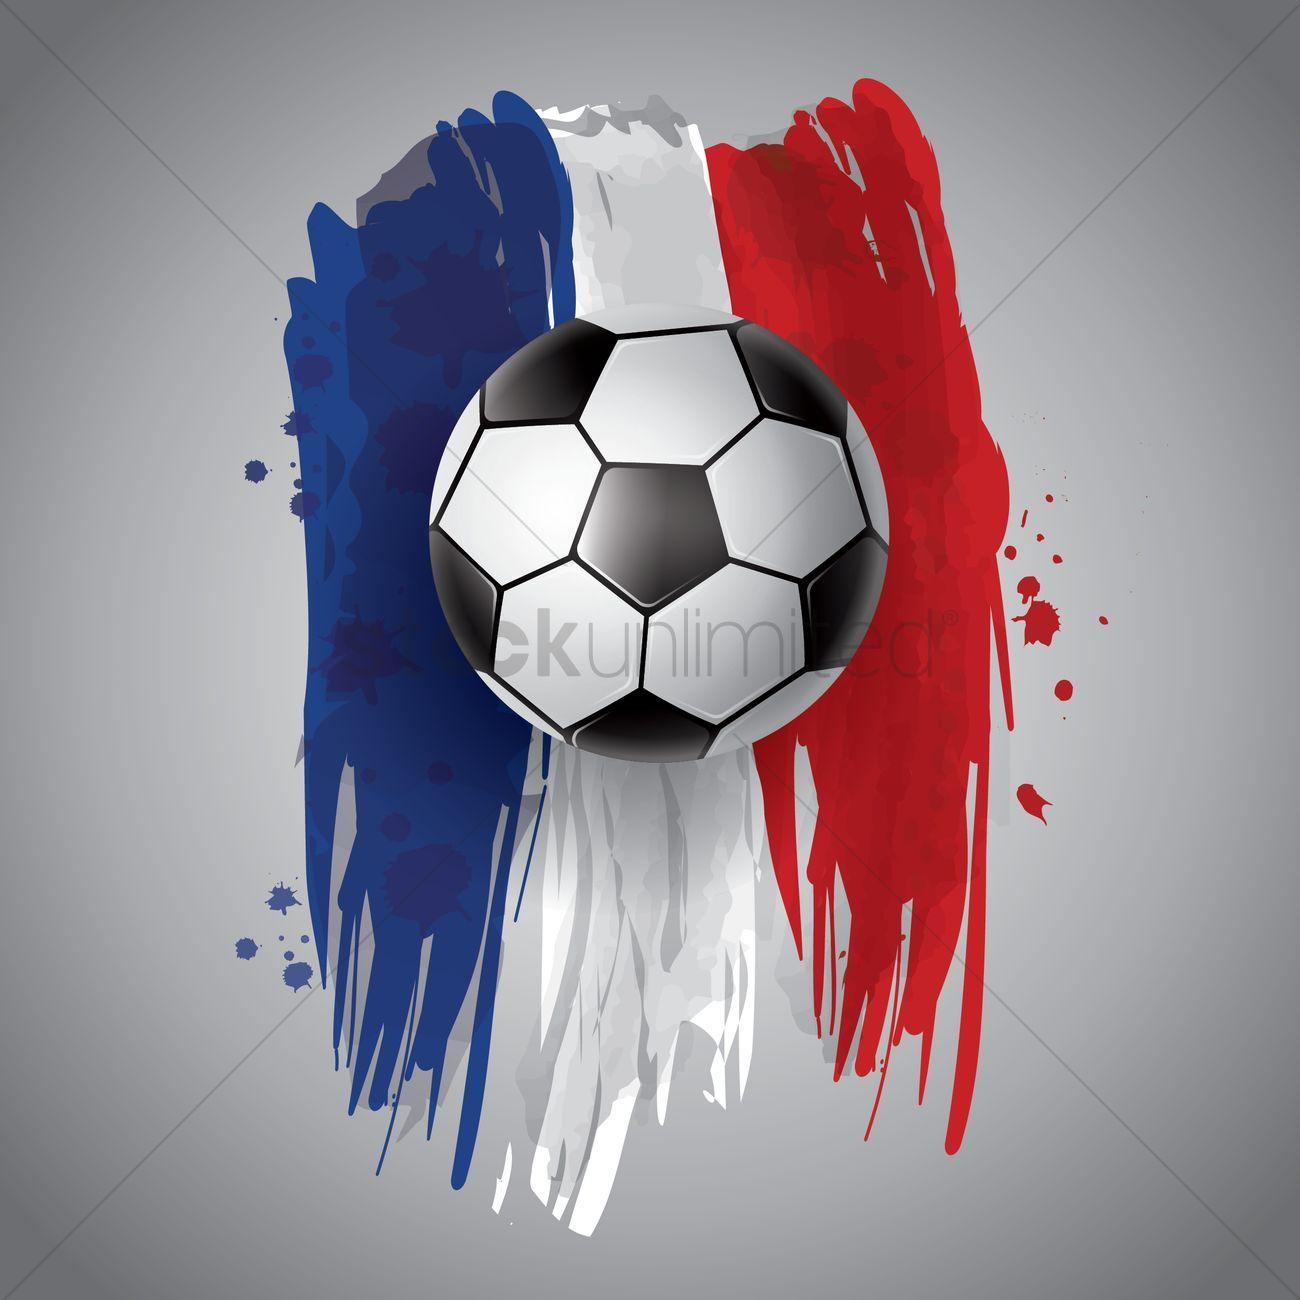 France soccer wallpaper Vector Image